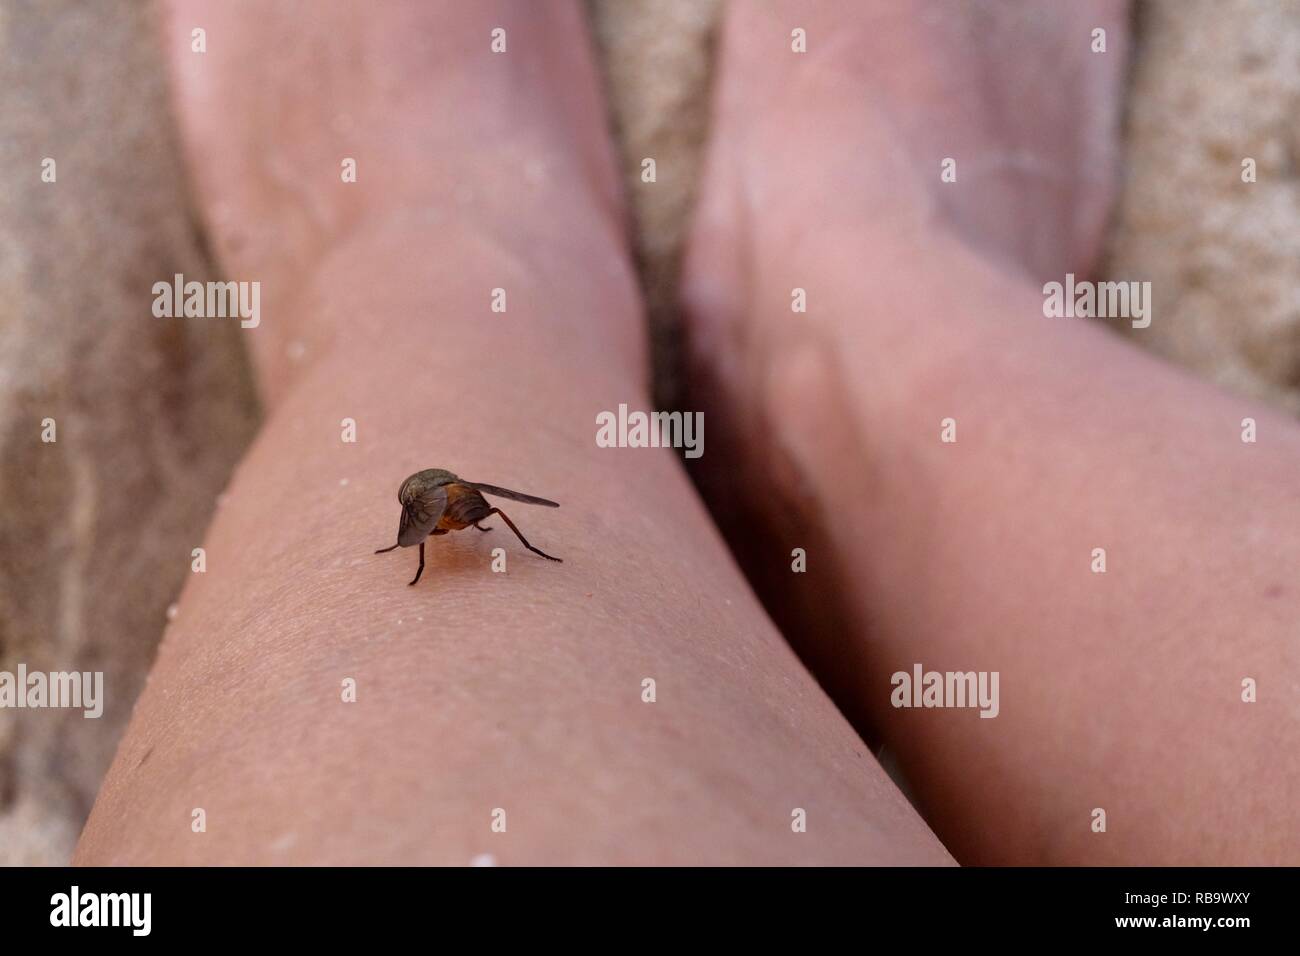 March fly or Horse fly on a leg at a beach, Smalleys Beach Camp Ground, Cape Hillsborough National Park, Qld, Australia Stock Photo